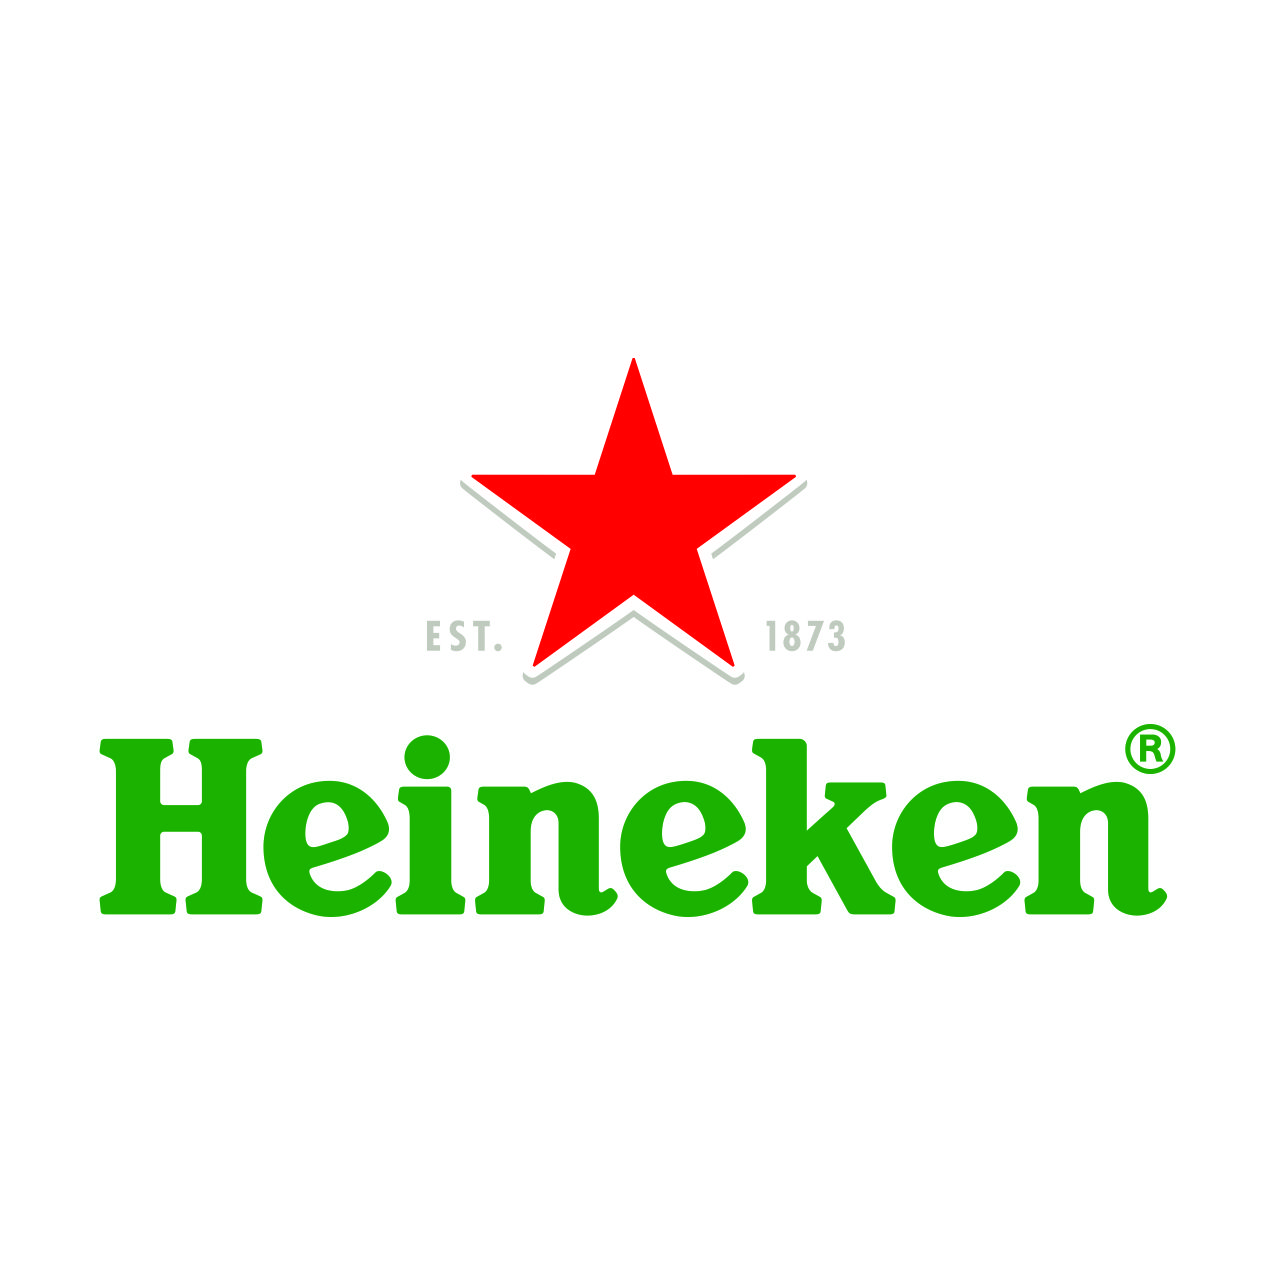 Heineken USA